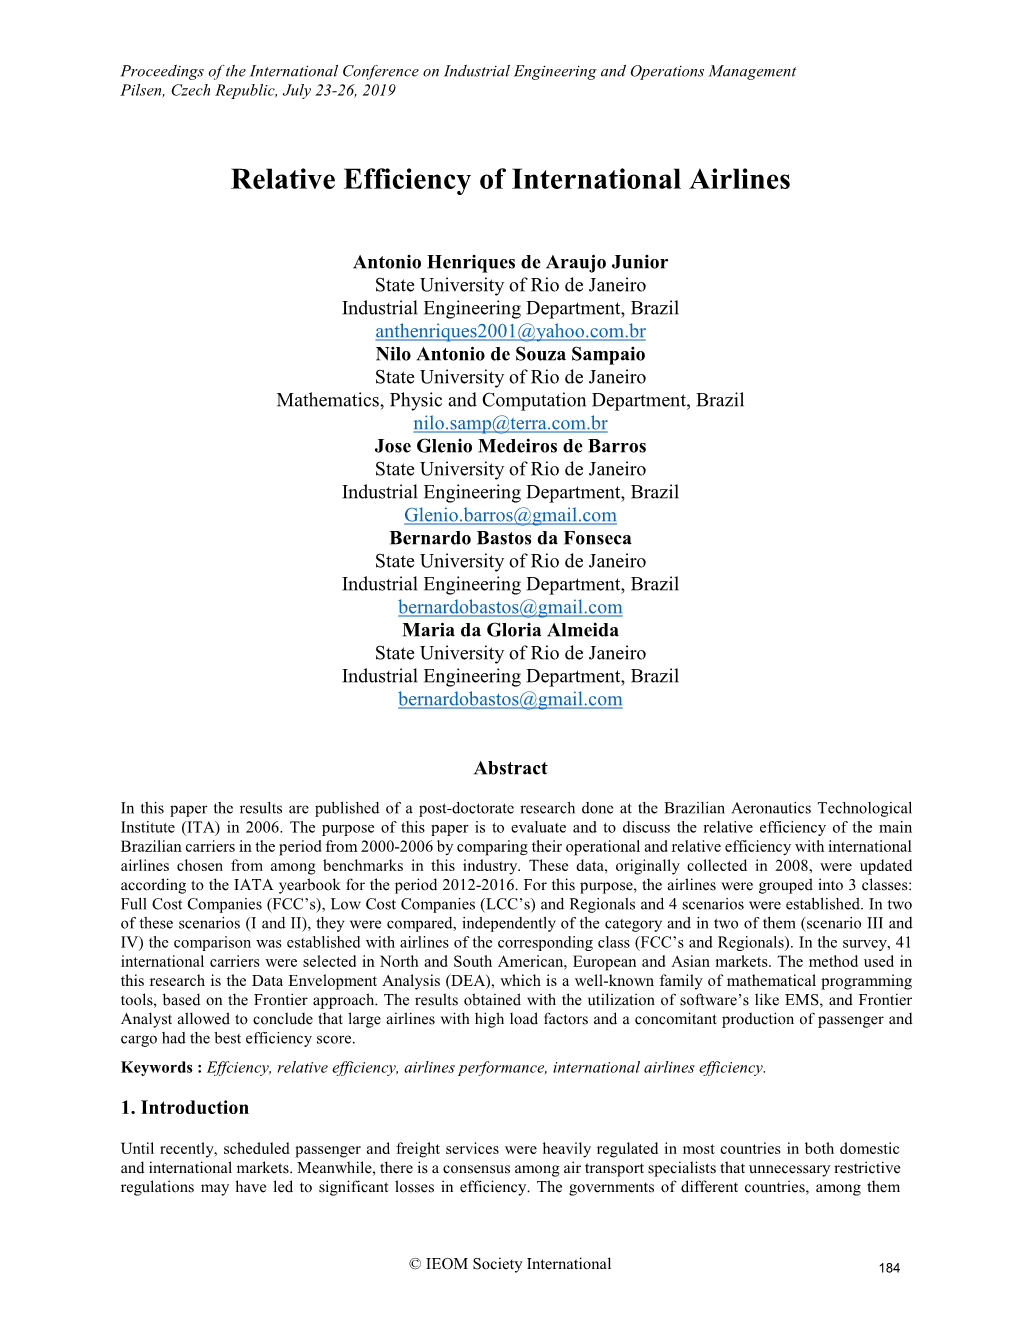 ID 71 Relative Efficiency of International Airlines